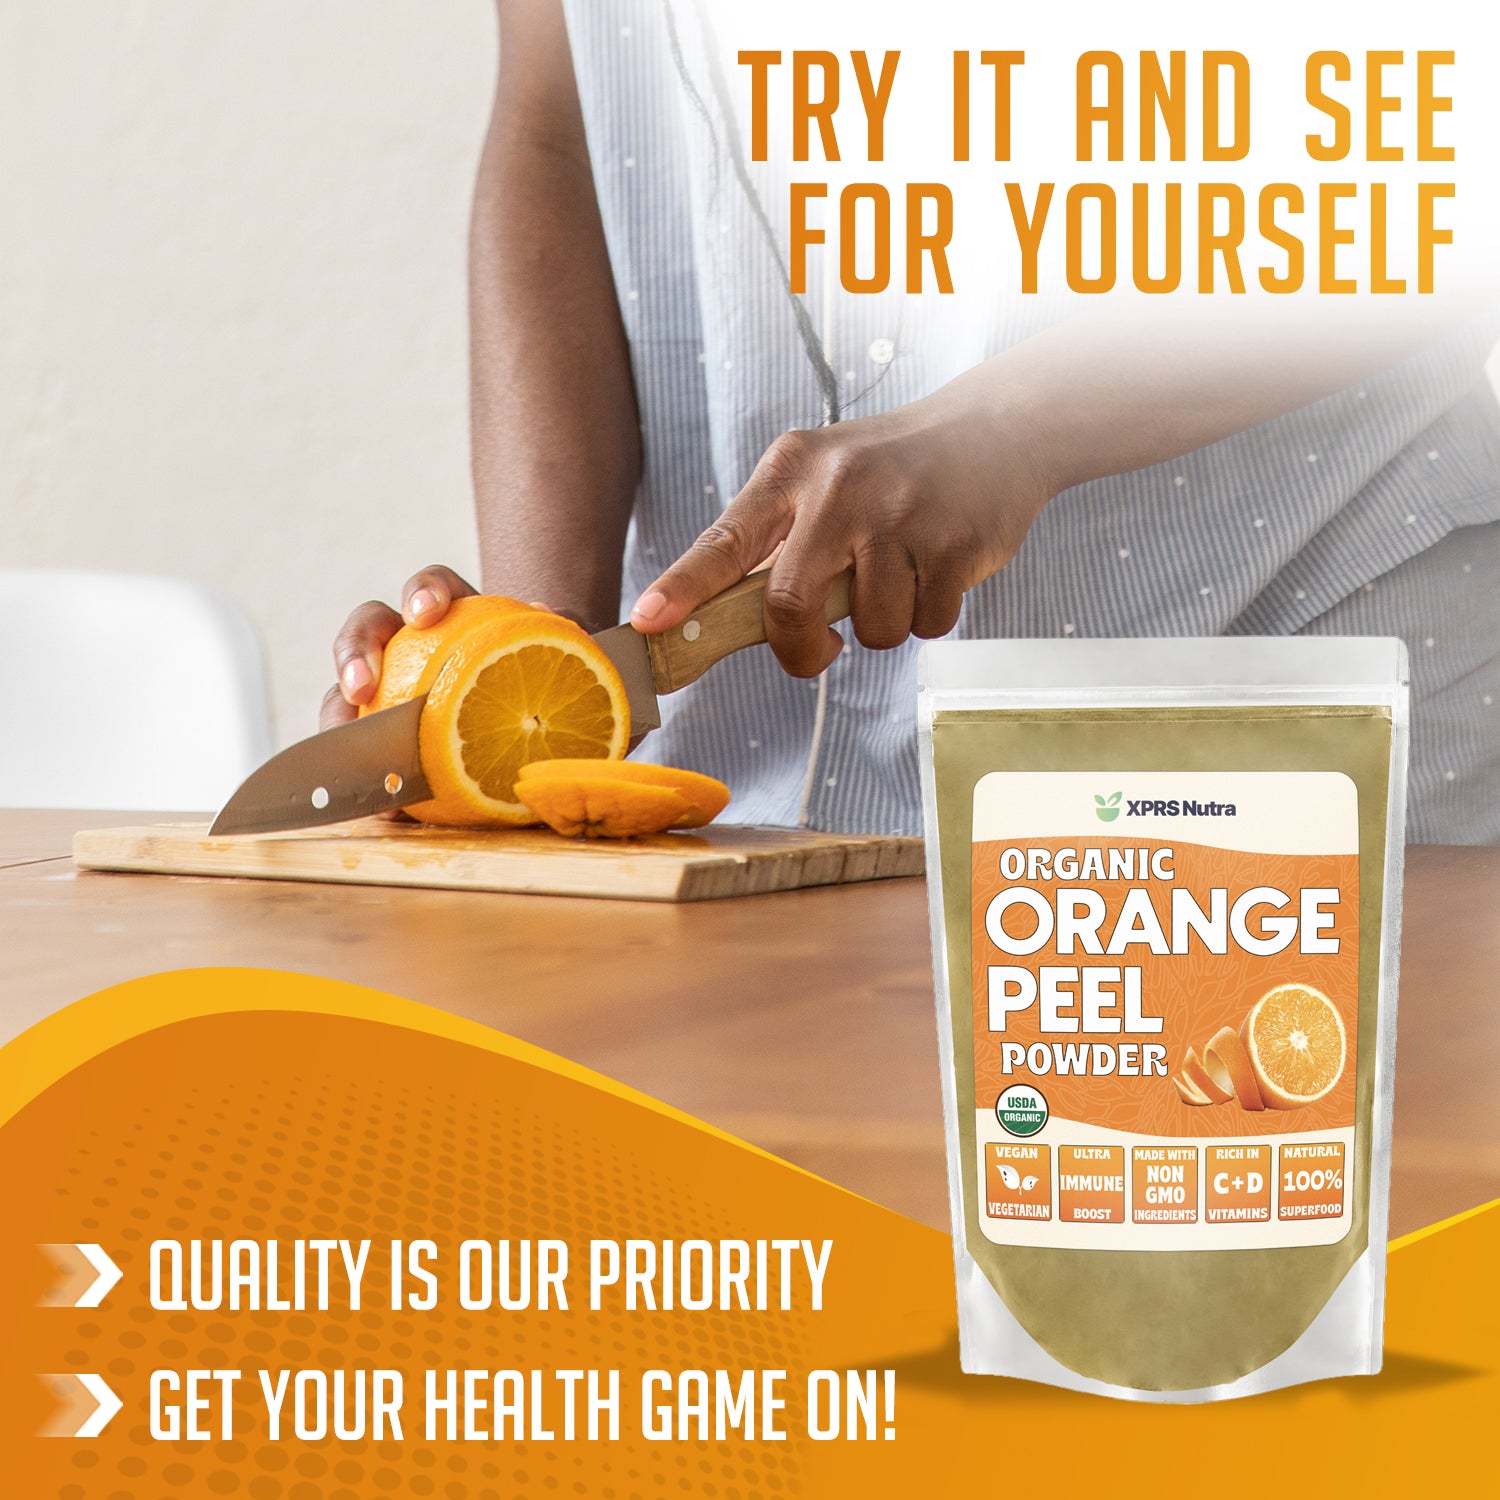 Organic Orange Peel Powder